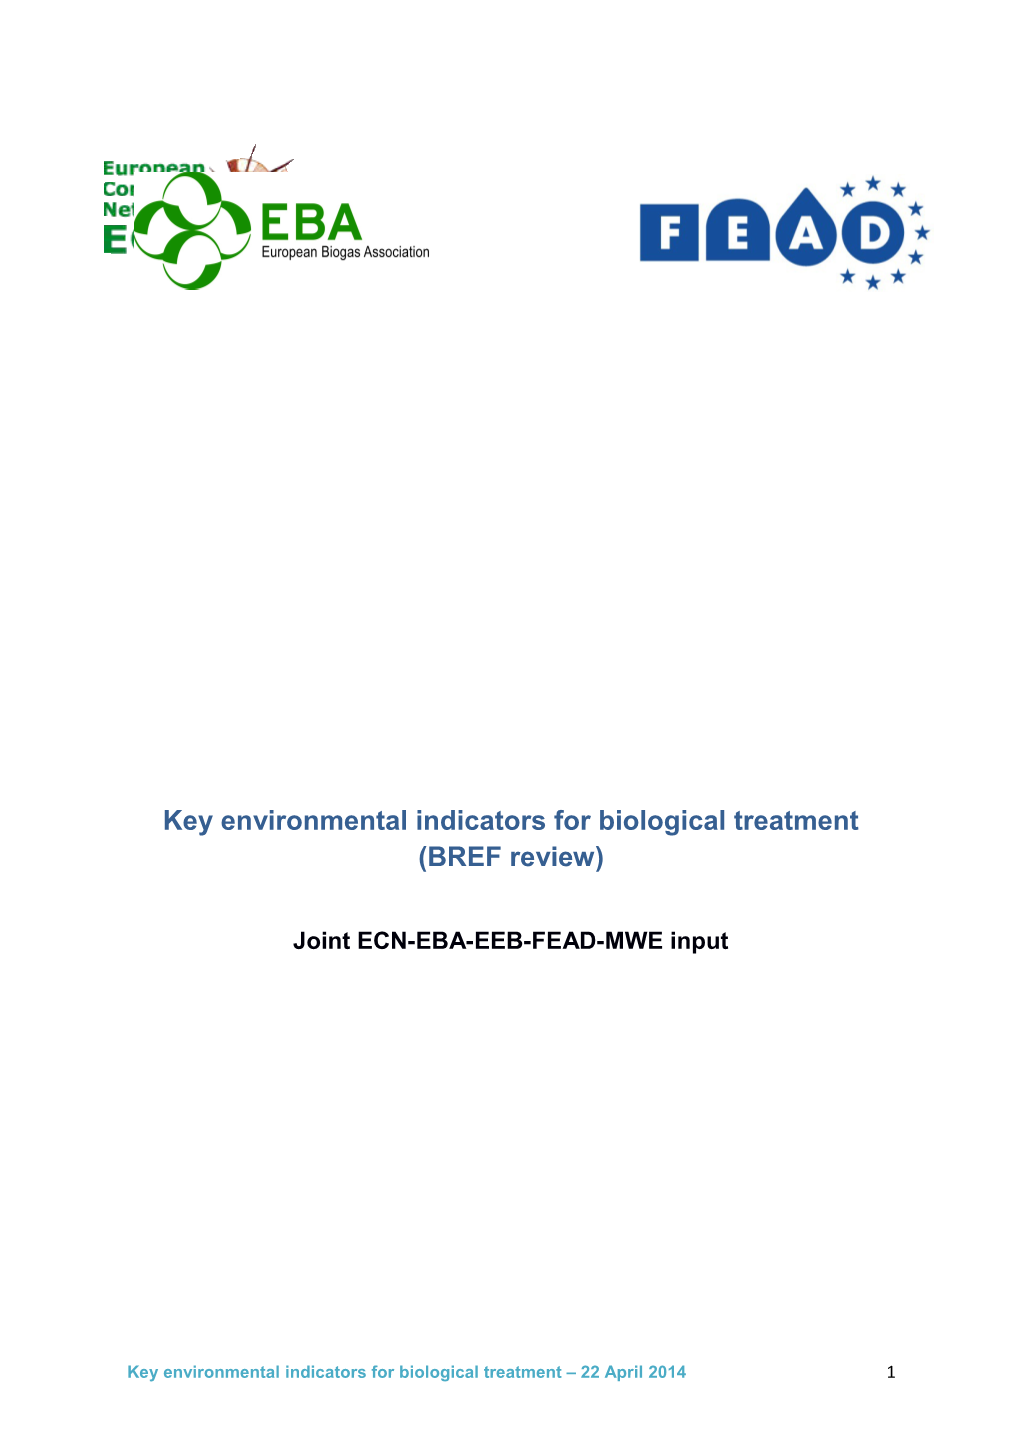 Key Environmental Indicators for Biological Treatment